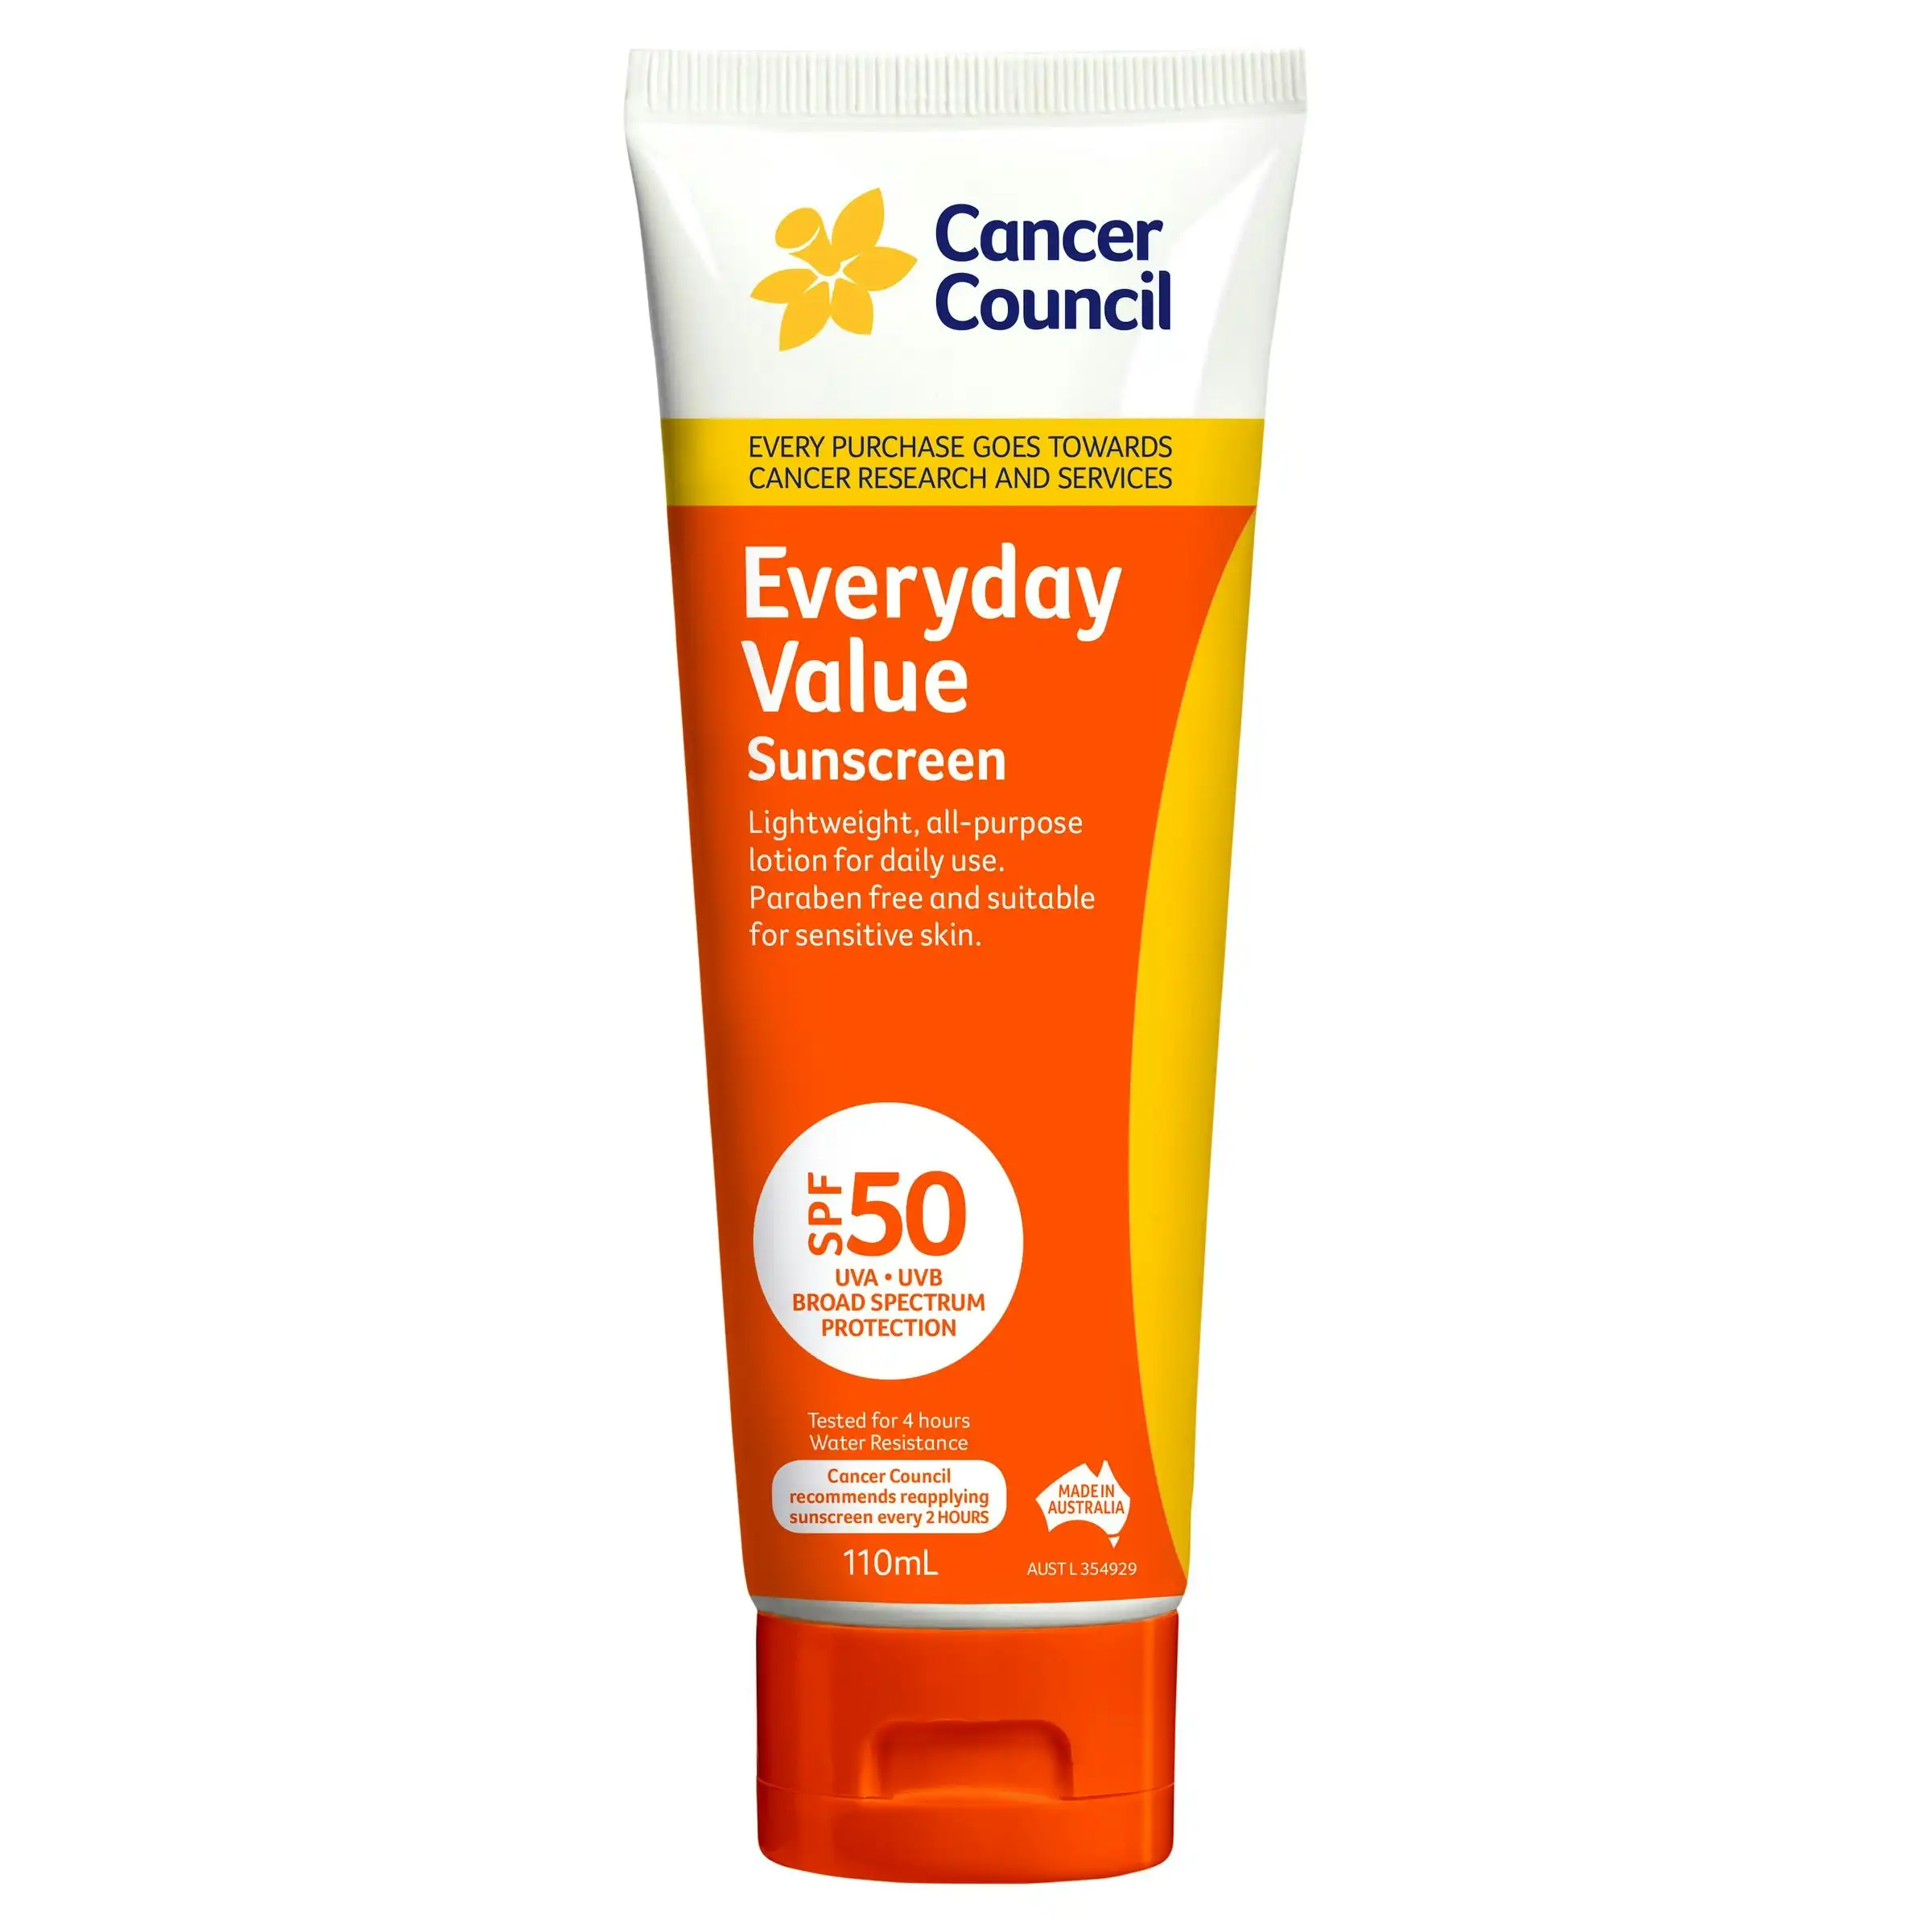 Cancer Council Everyday Value Sunscreen SPF 50 110ml